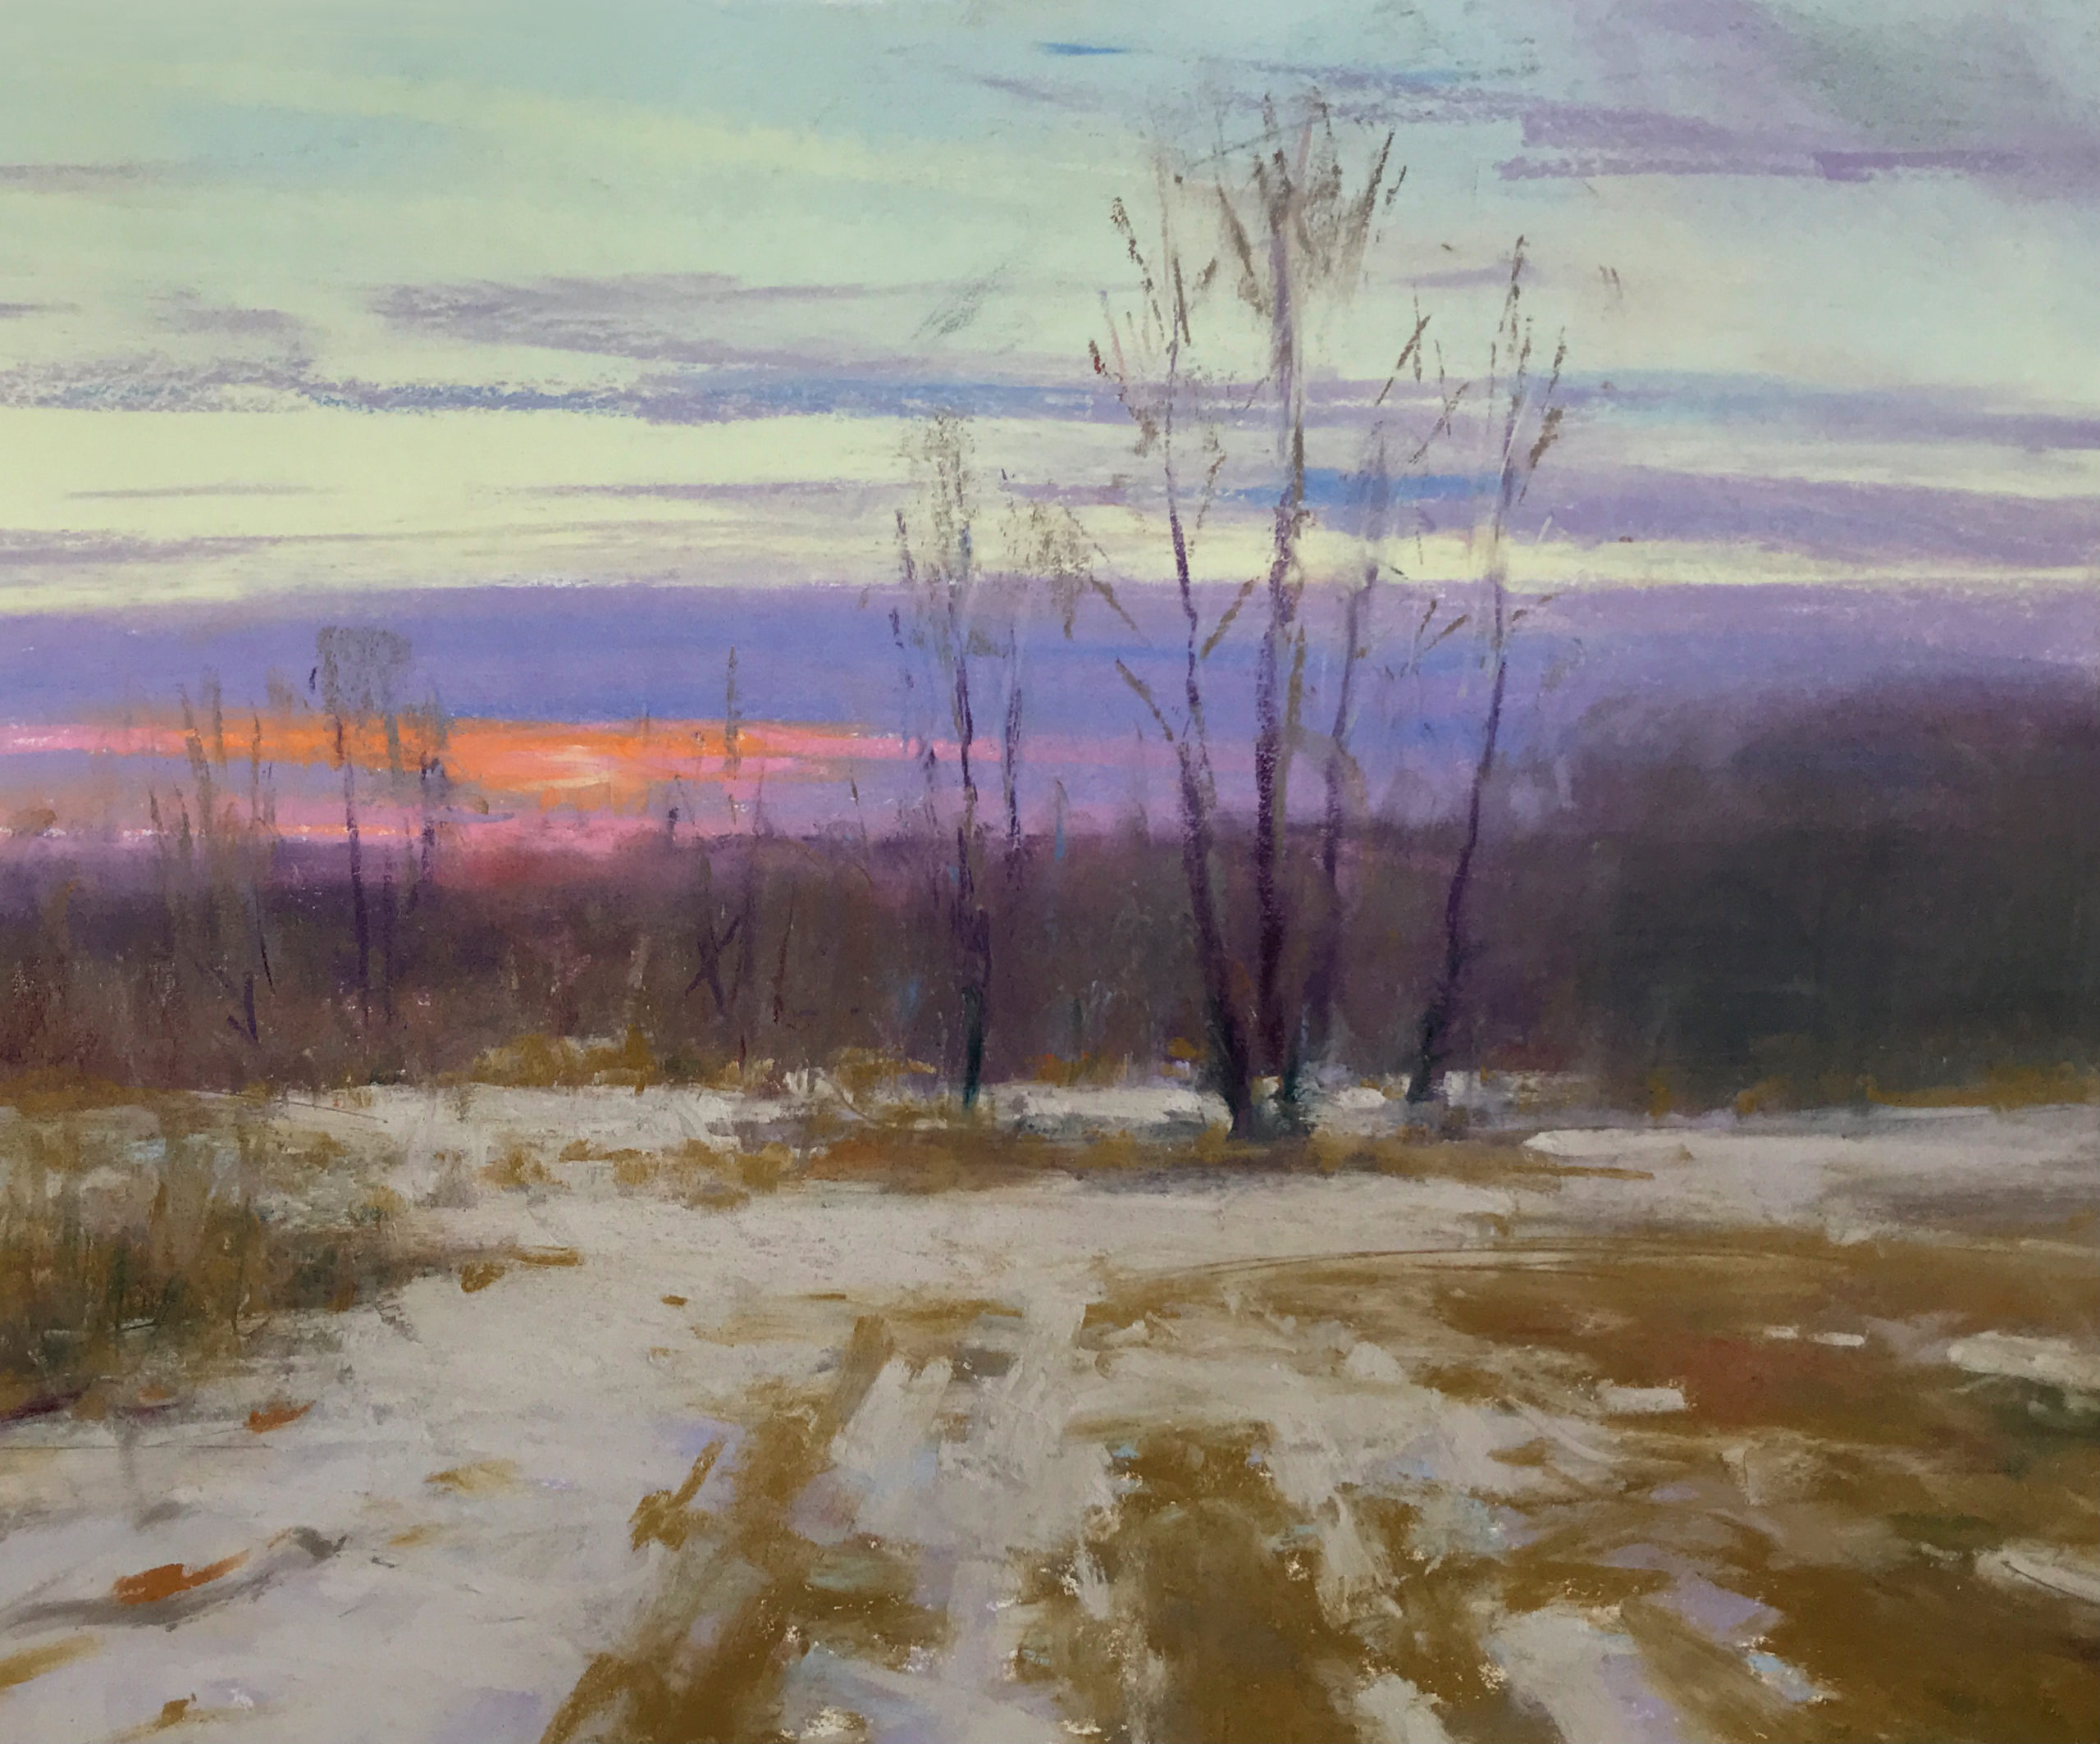 Christopher Copeland, "Winter Solstice," pastel, 11x14 in